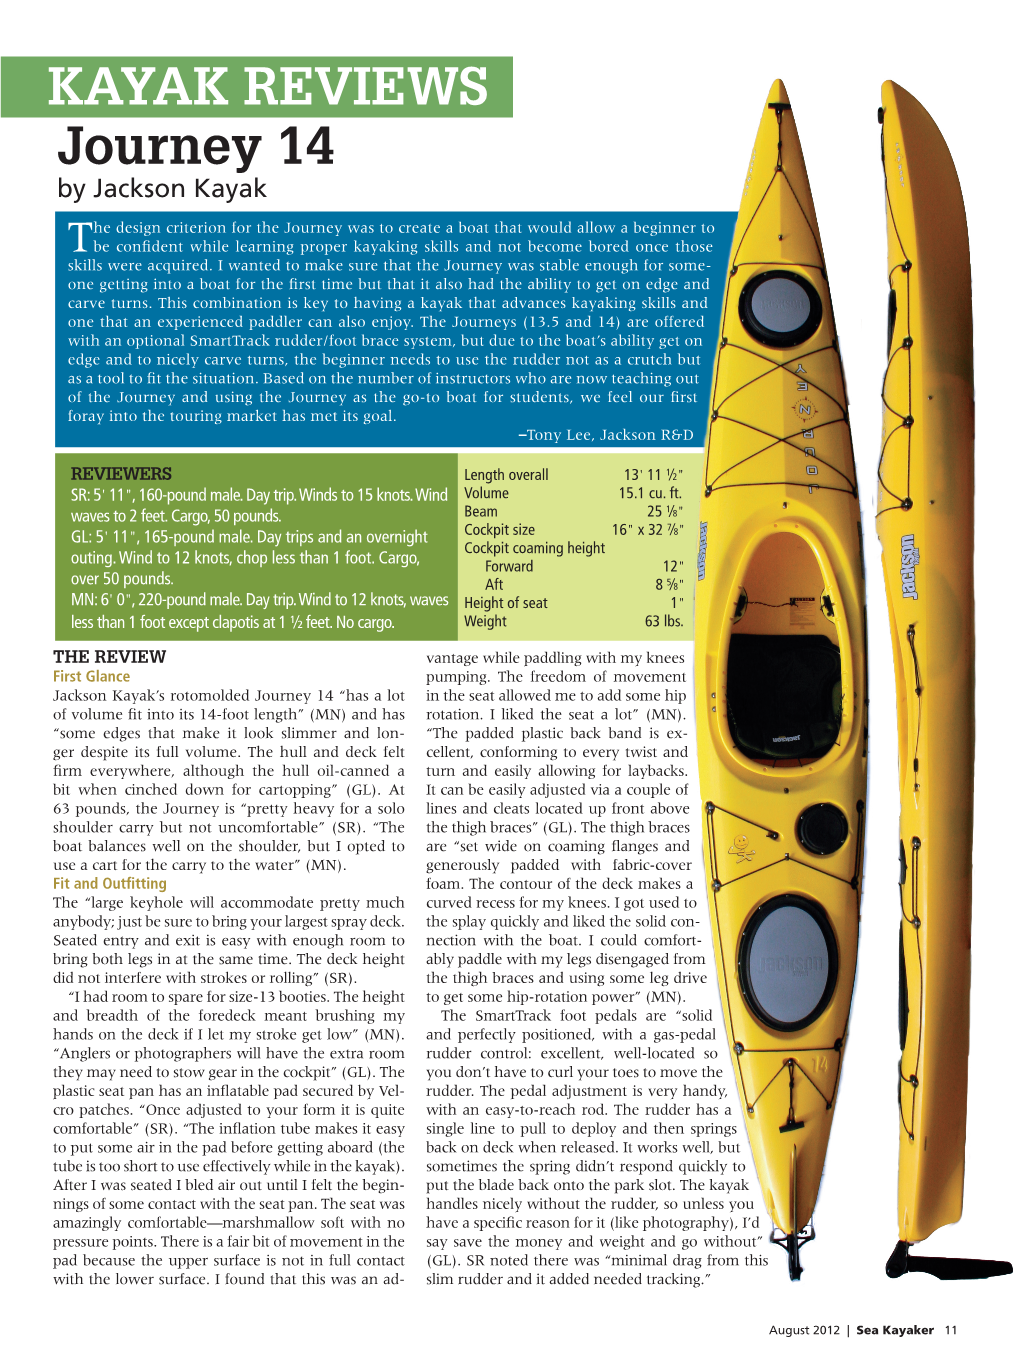 KAYAK REVIEWS Journey 14 by Jackson Kayak